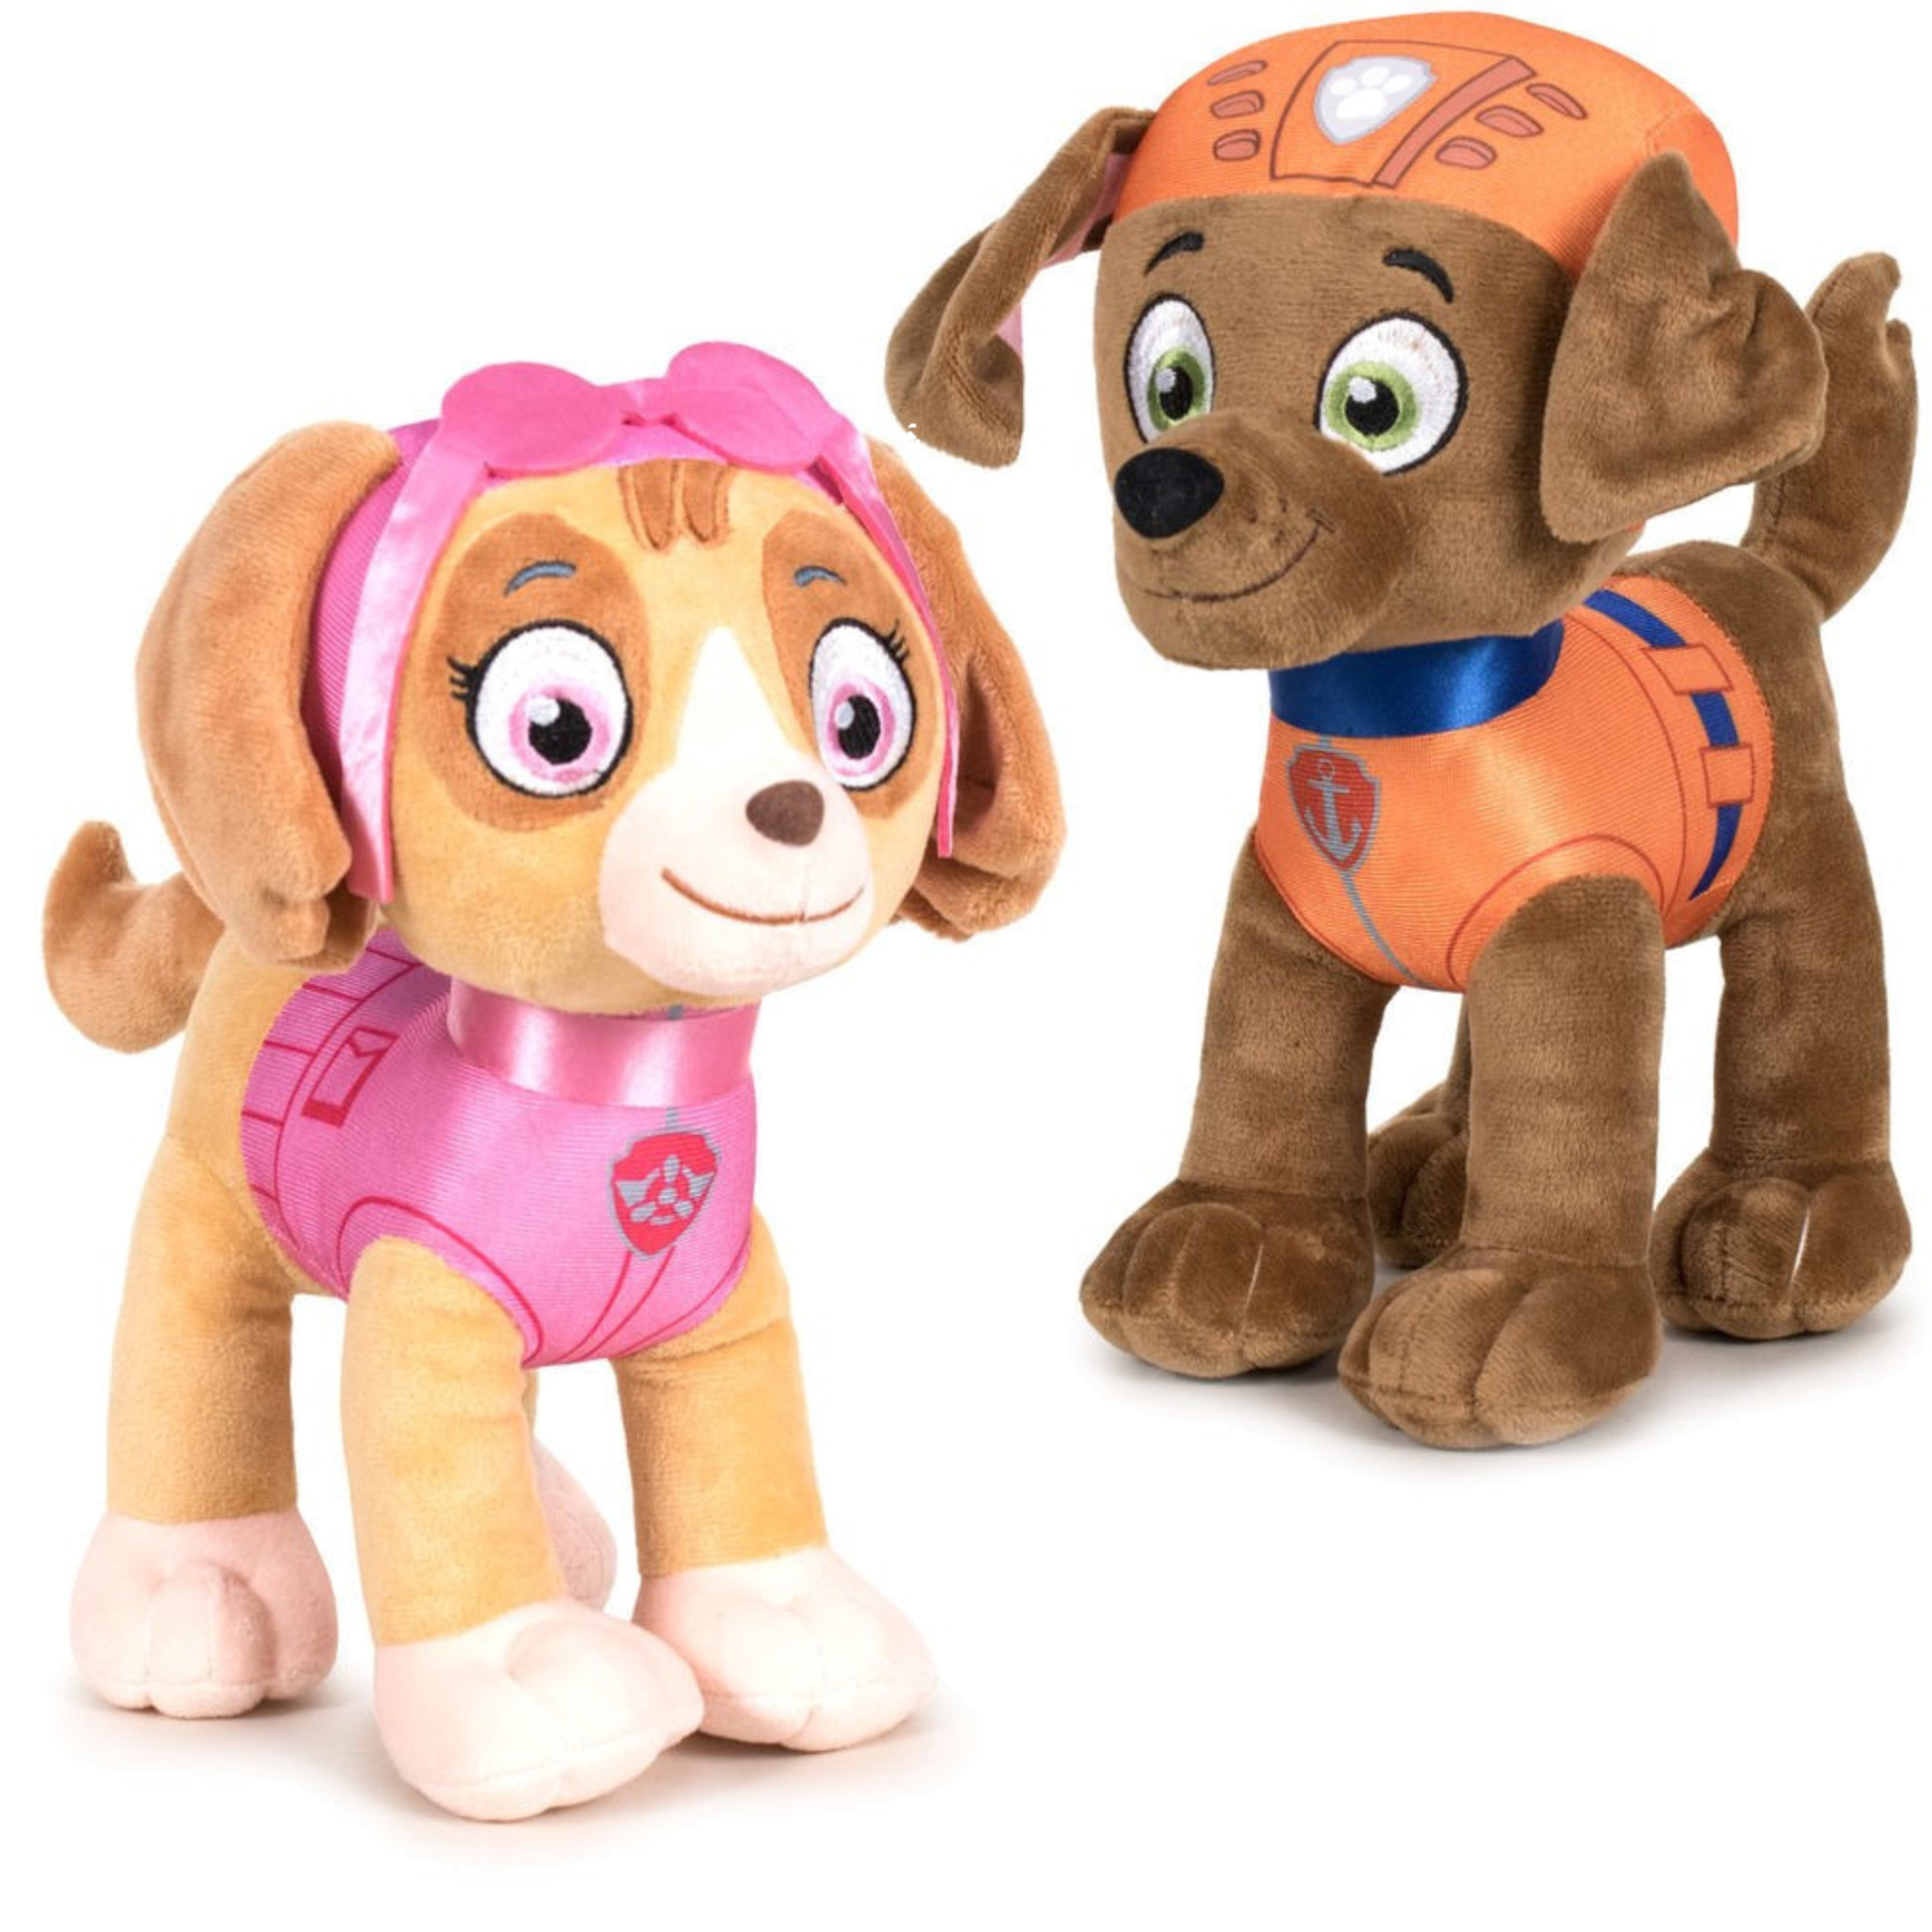 Paw Patrol figuren speelgoed knuffels set van 2x karakters Zuma en Skye 19 cm -